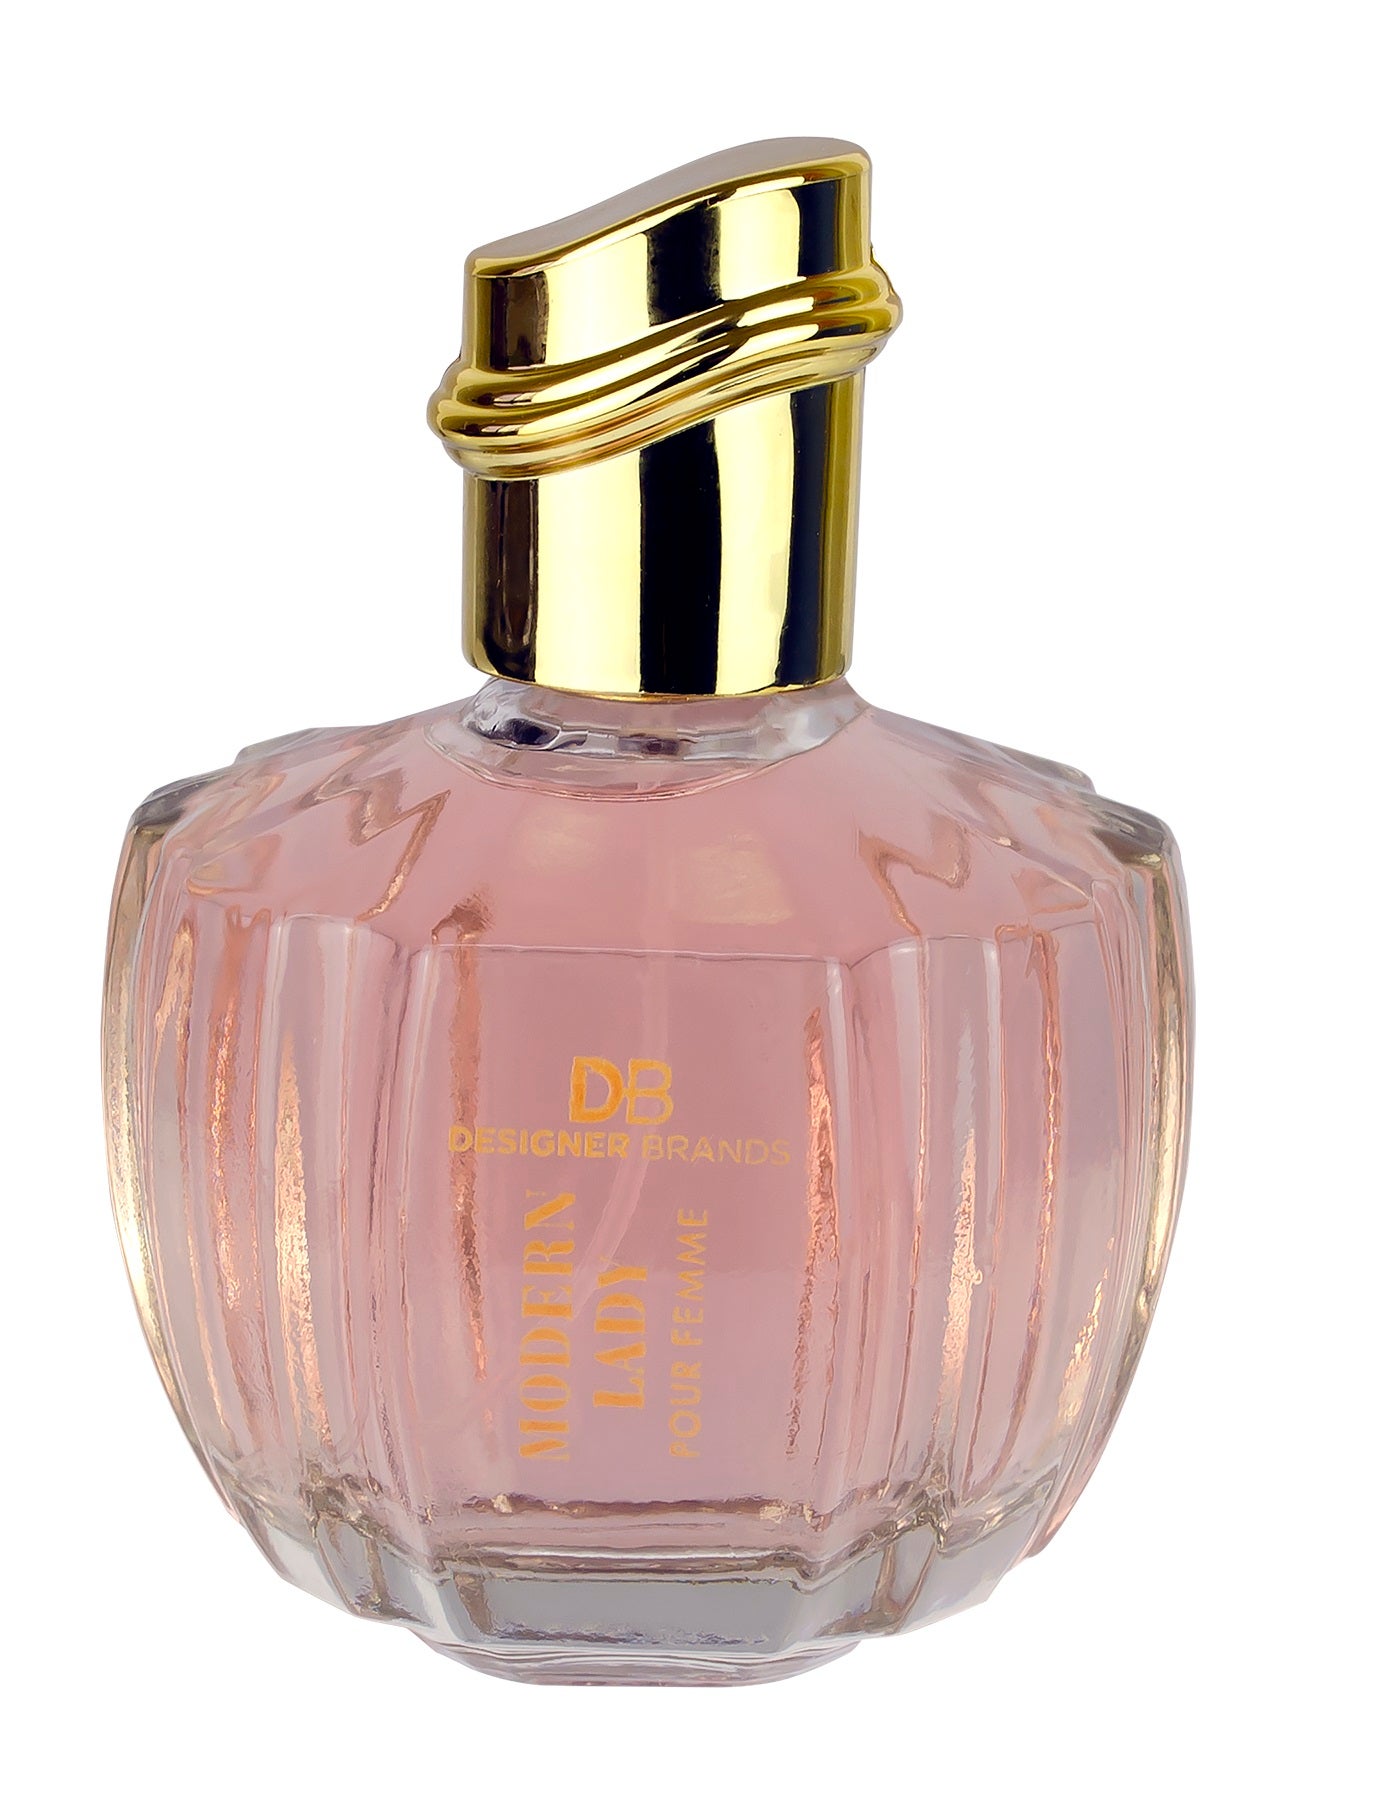 Designer Brands Modern Lady Women's Perfume